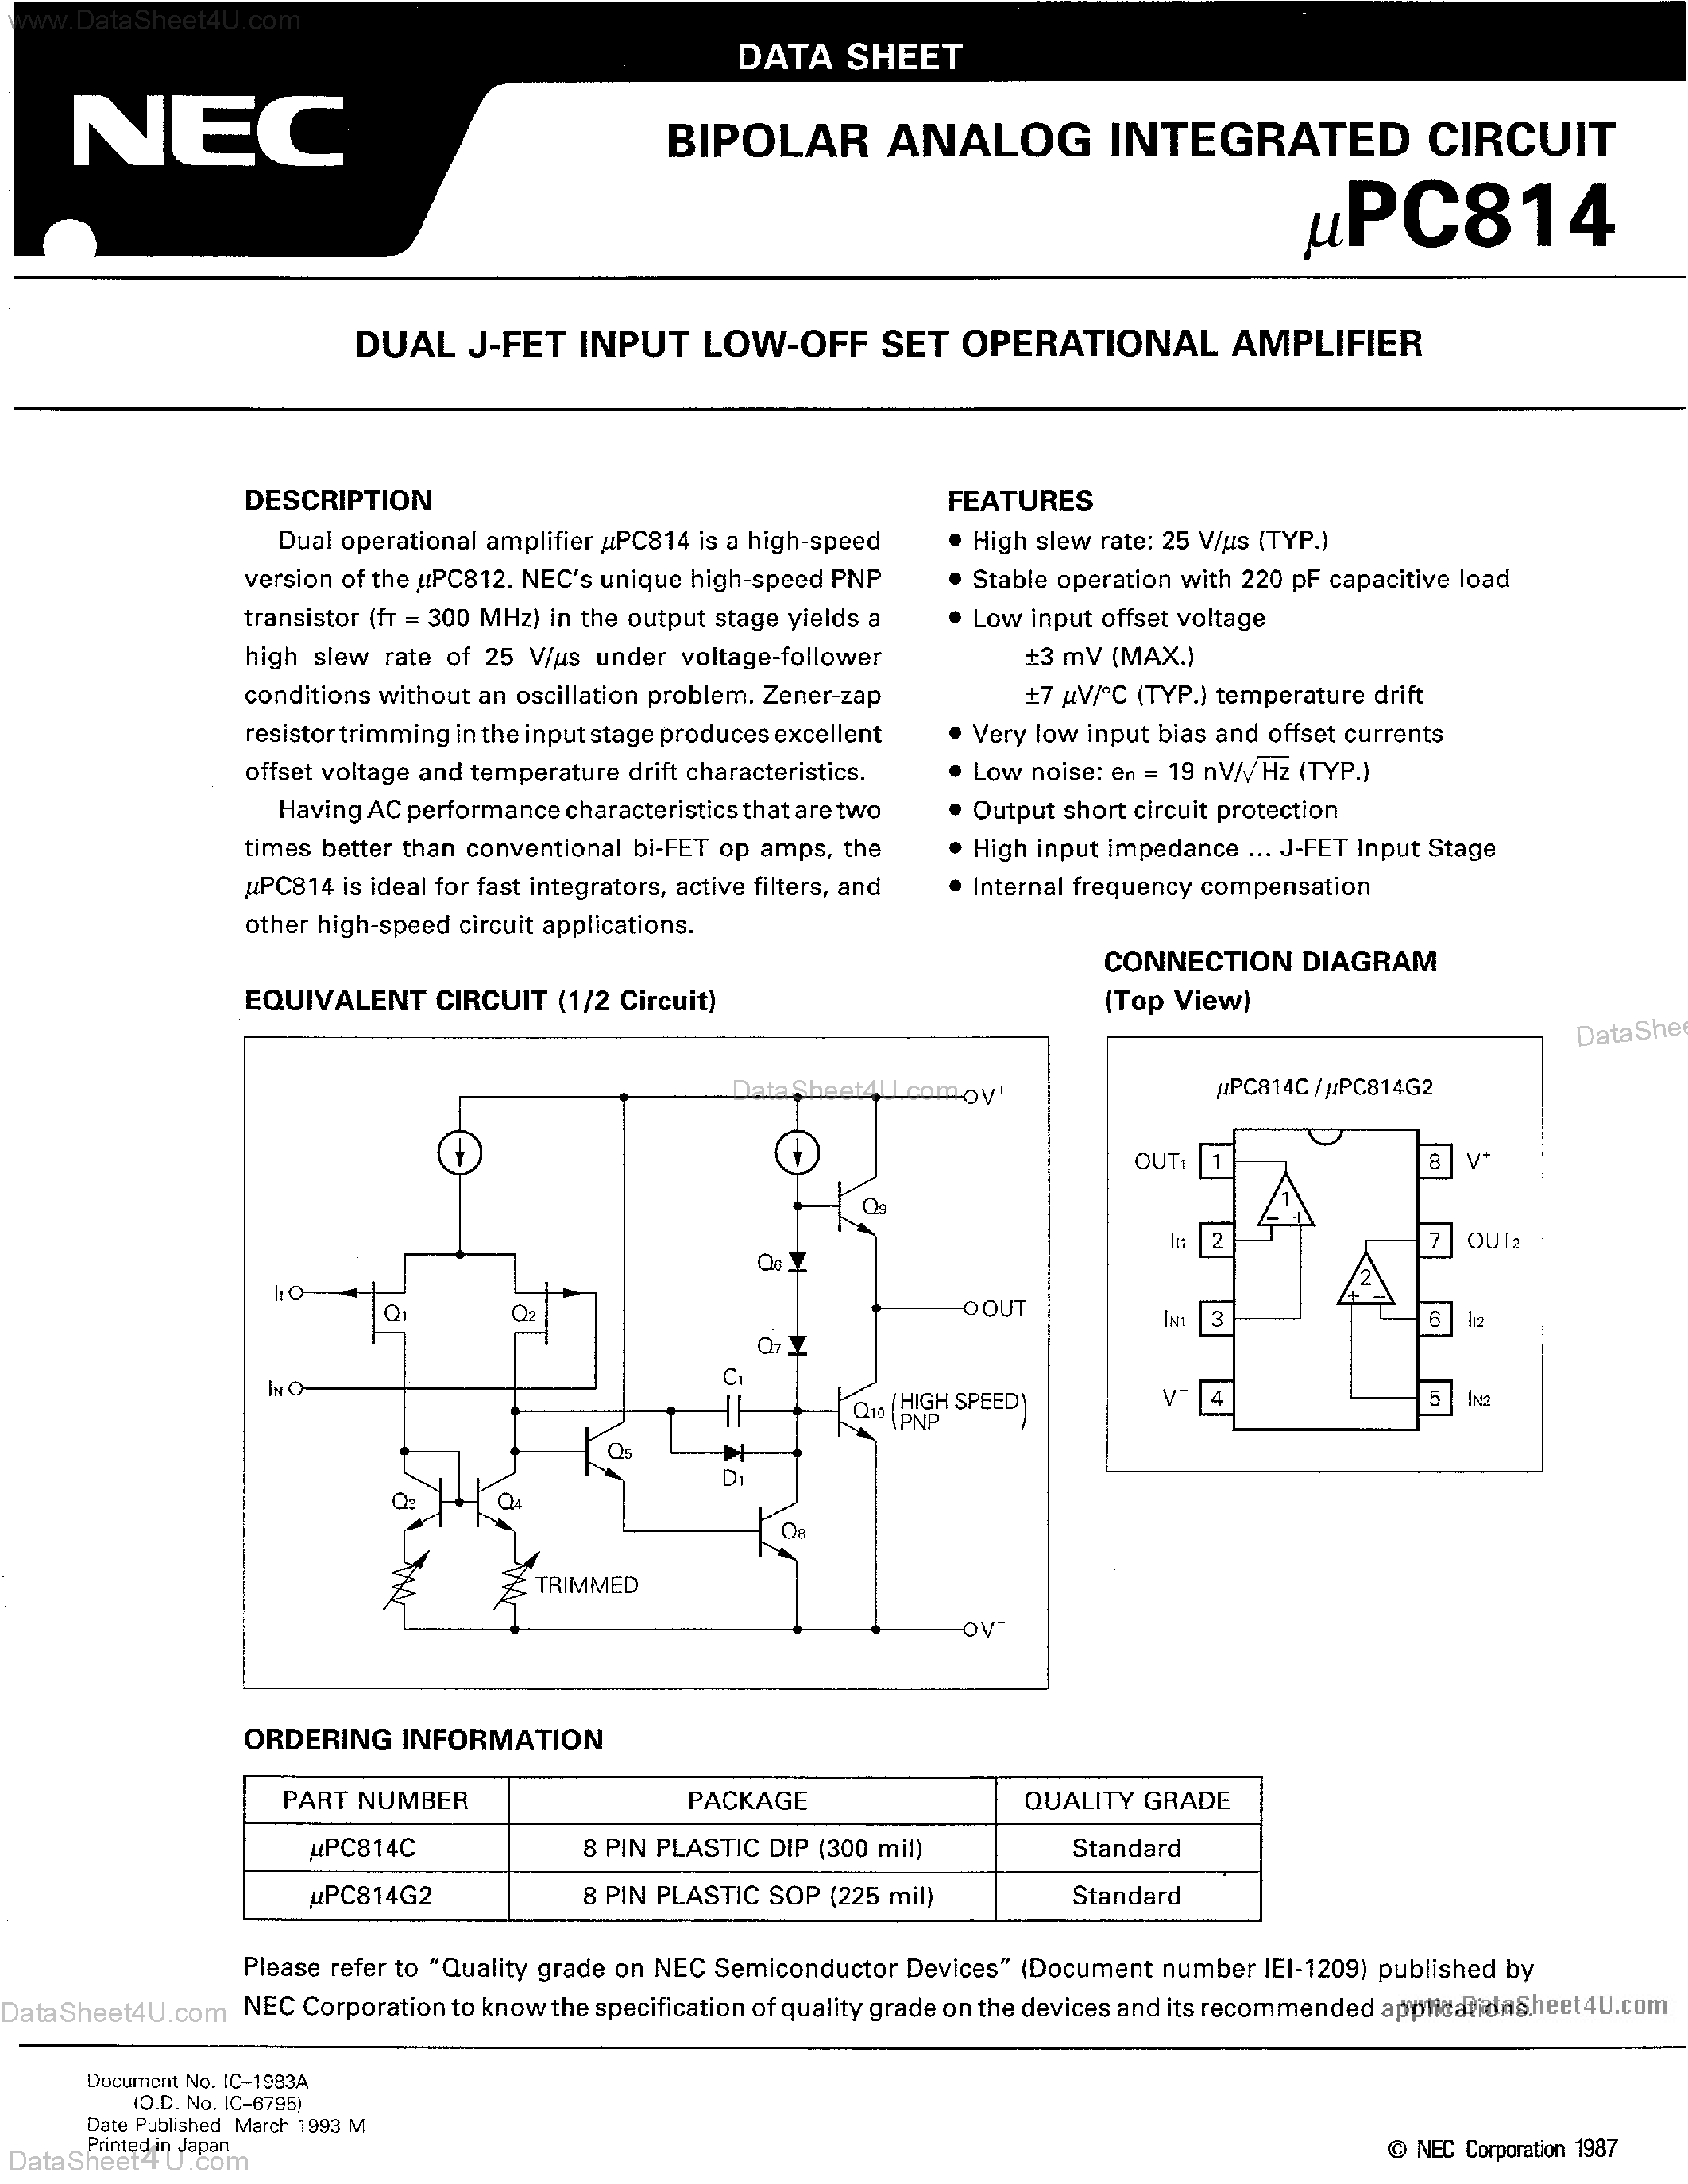 Даташит UPC814 - Dual J-FET Input Low Off Set Operational Amplifier страница 1